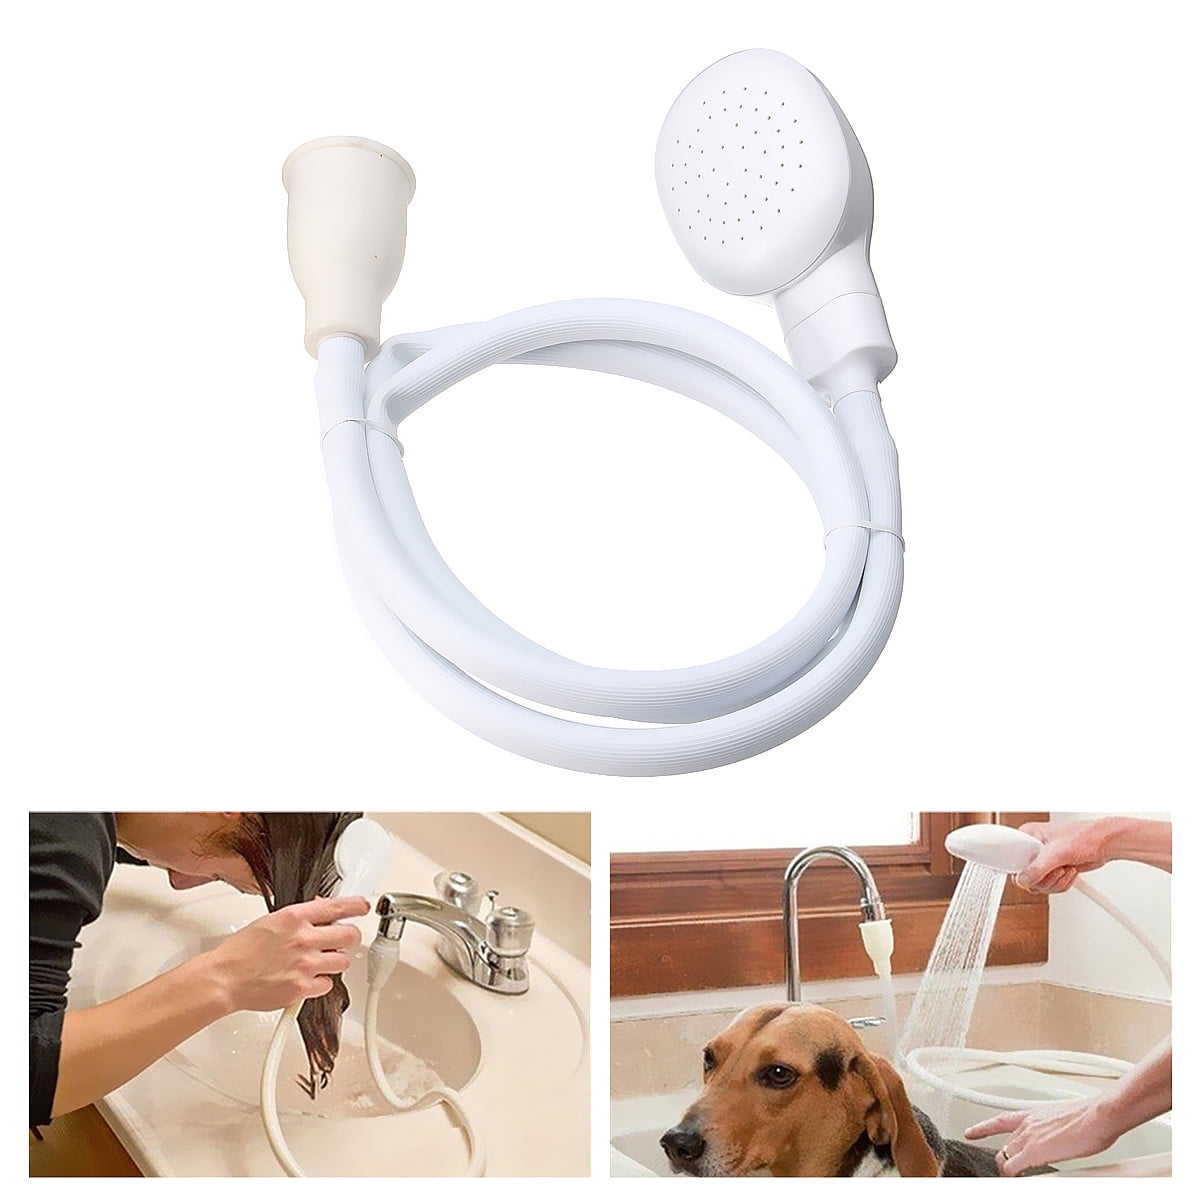 Handheld Shower Head Spray Drains, Dog Shower Head For Bathtub